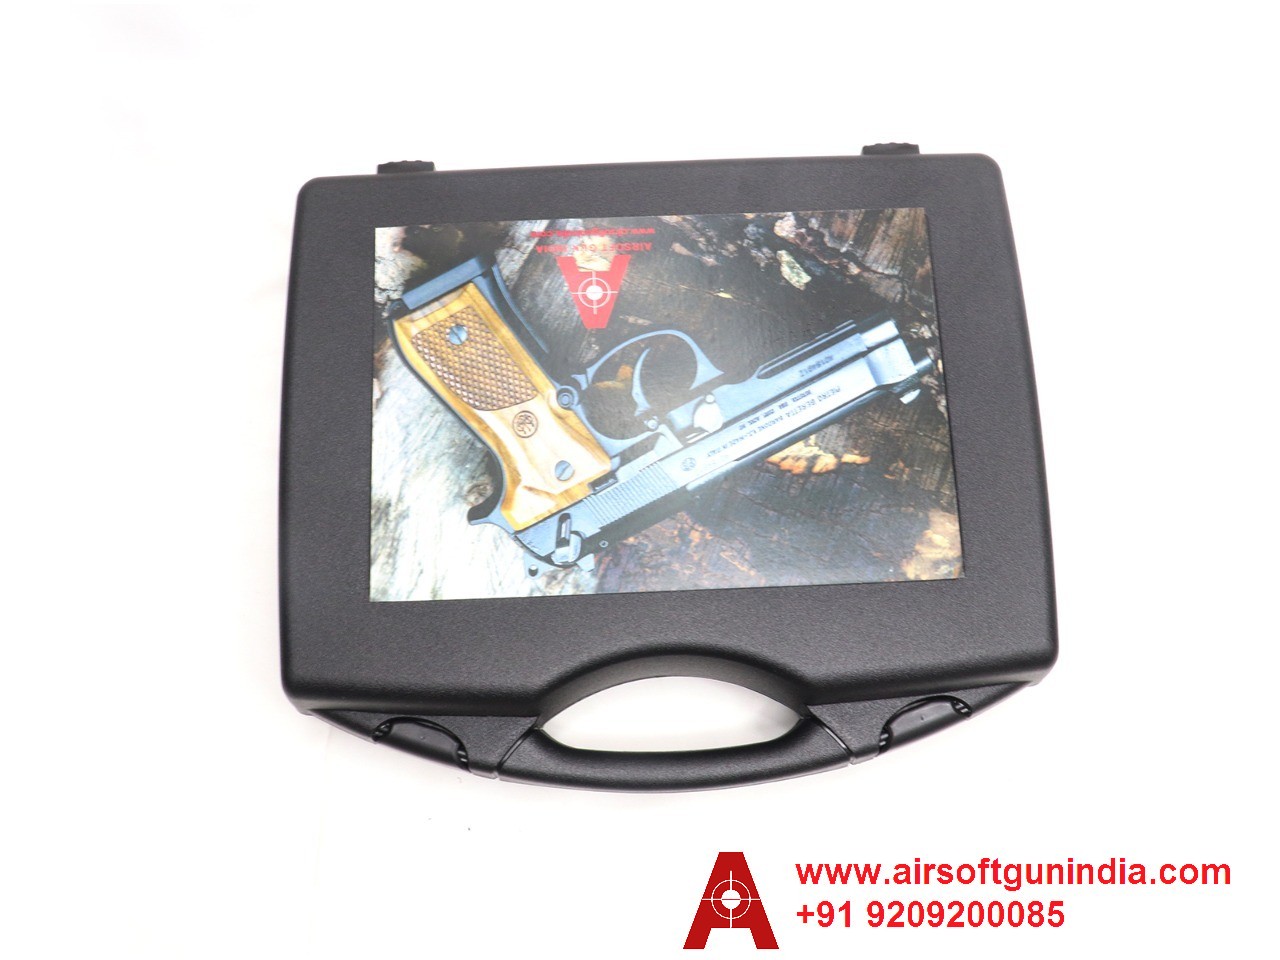 PISTOL / REVOLVER PROTECTIVE GUN CASE BOX BY AIRSOFT GUN INDIA